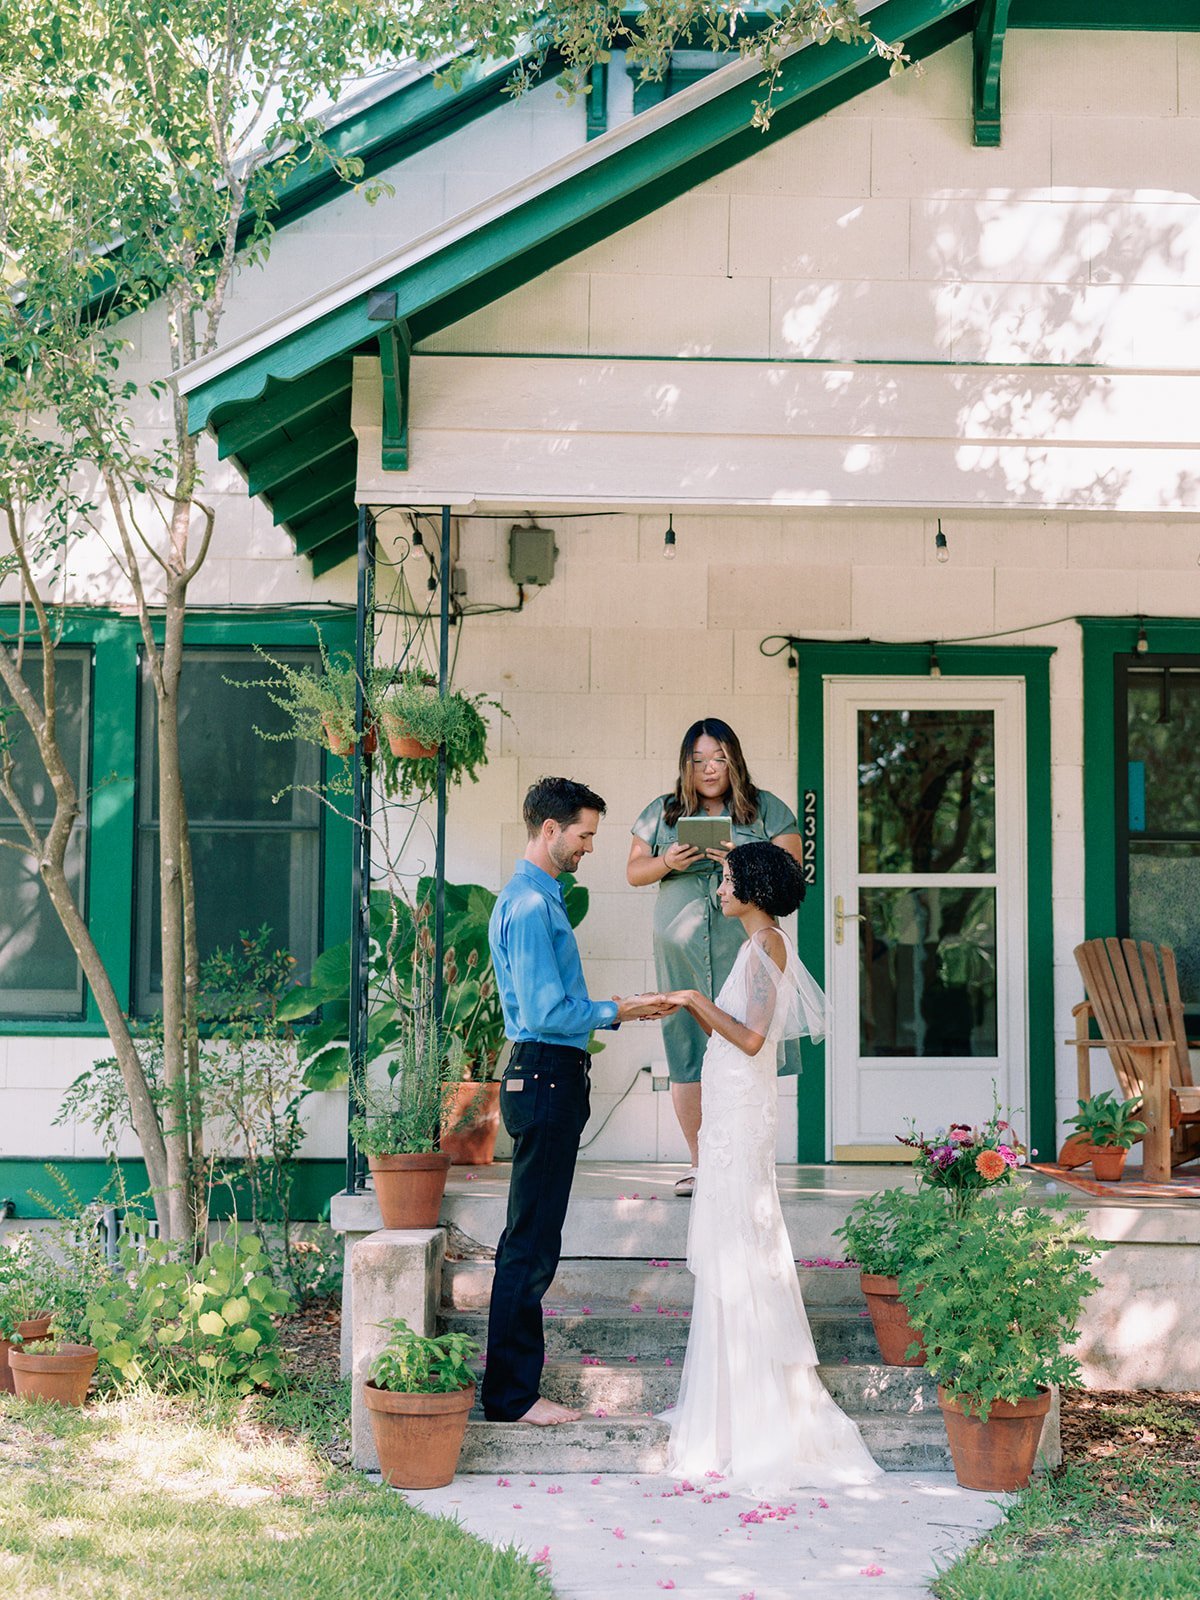 Best-Austin-Wedding-Photographers-Elopement-Film-35mm-Asheville-Santa-Barbara-13.jpg